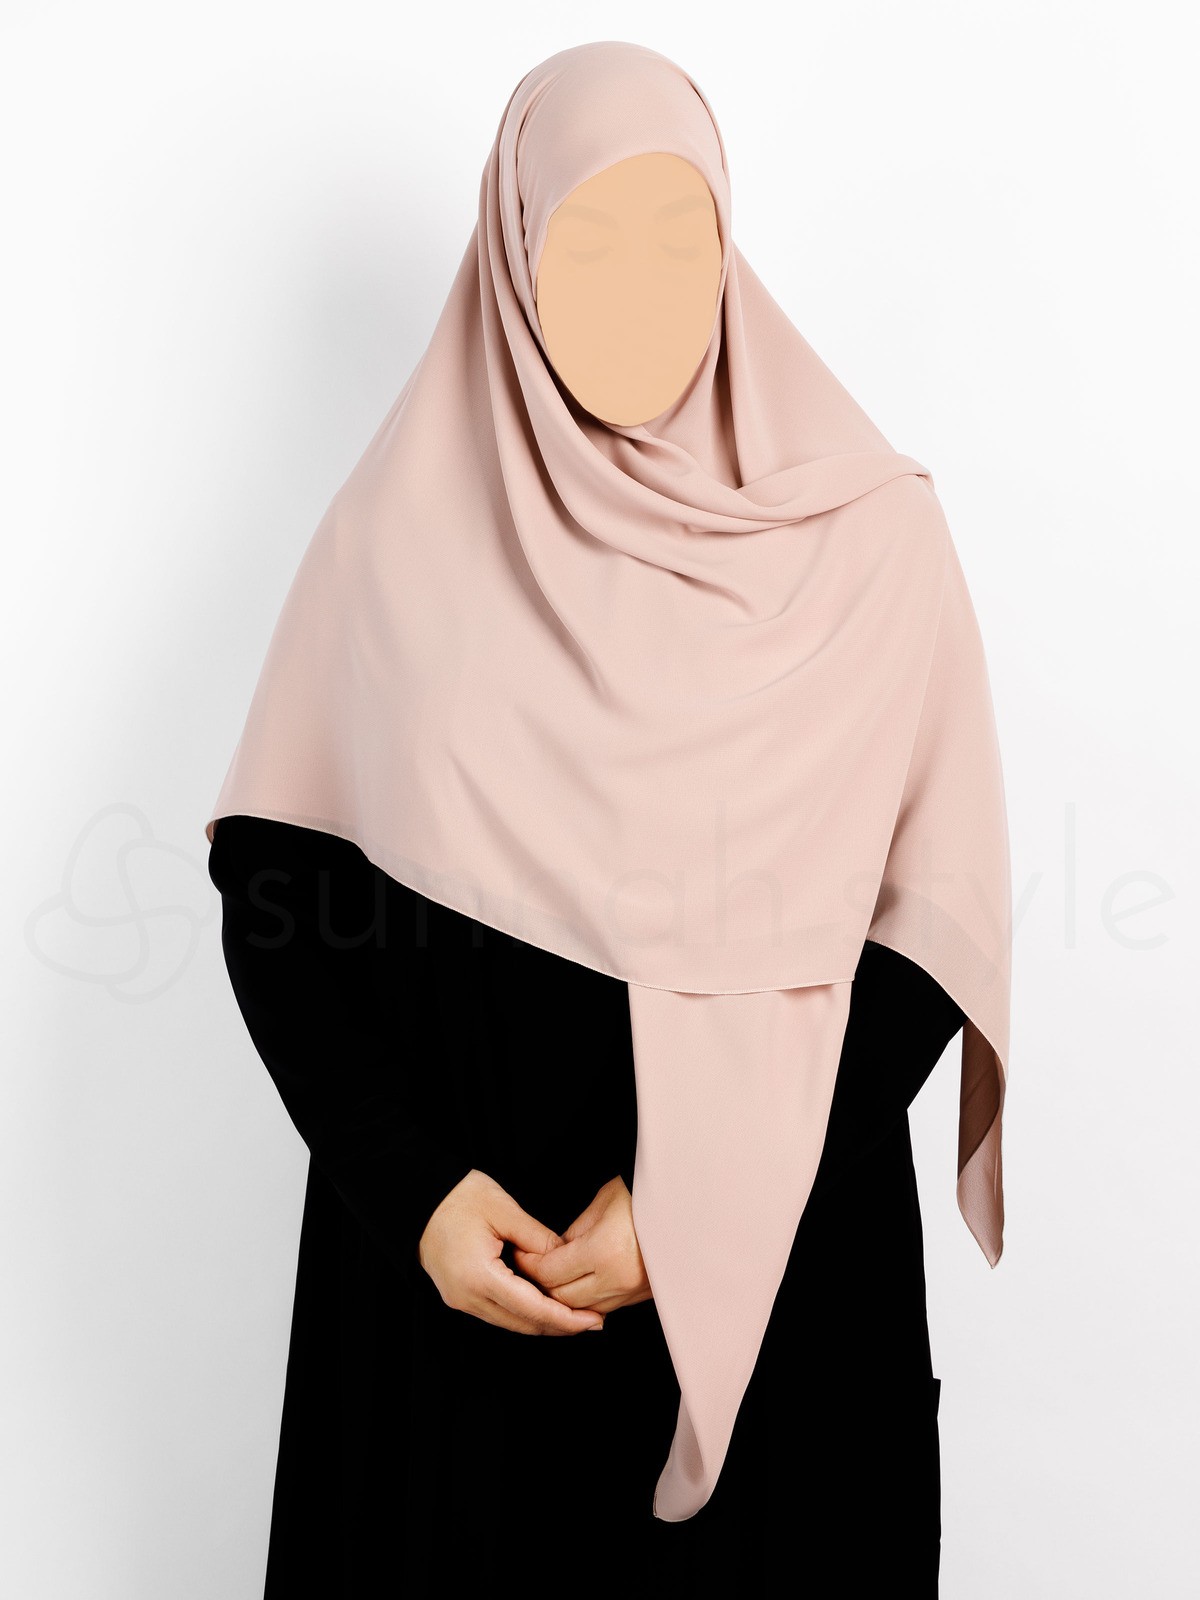 Sunnah Style - Essentials Square Hijab (Premium Chiffon) - Large (Blue Jay)